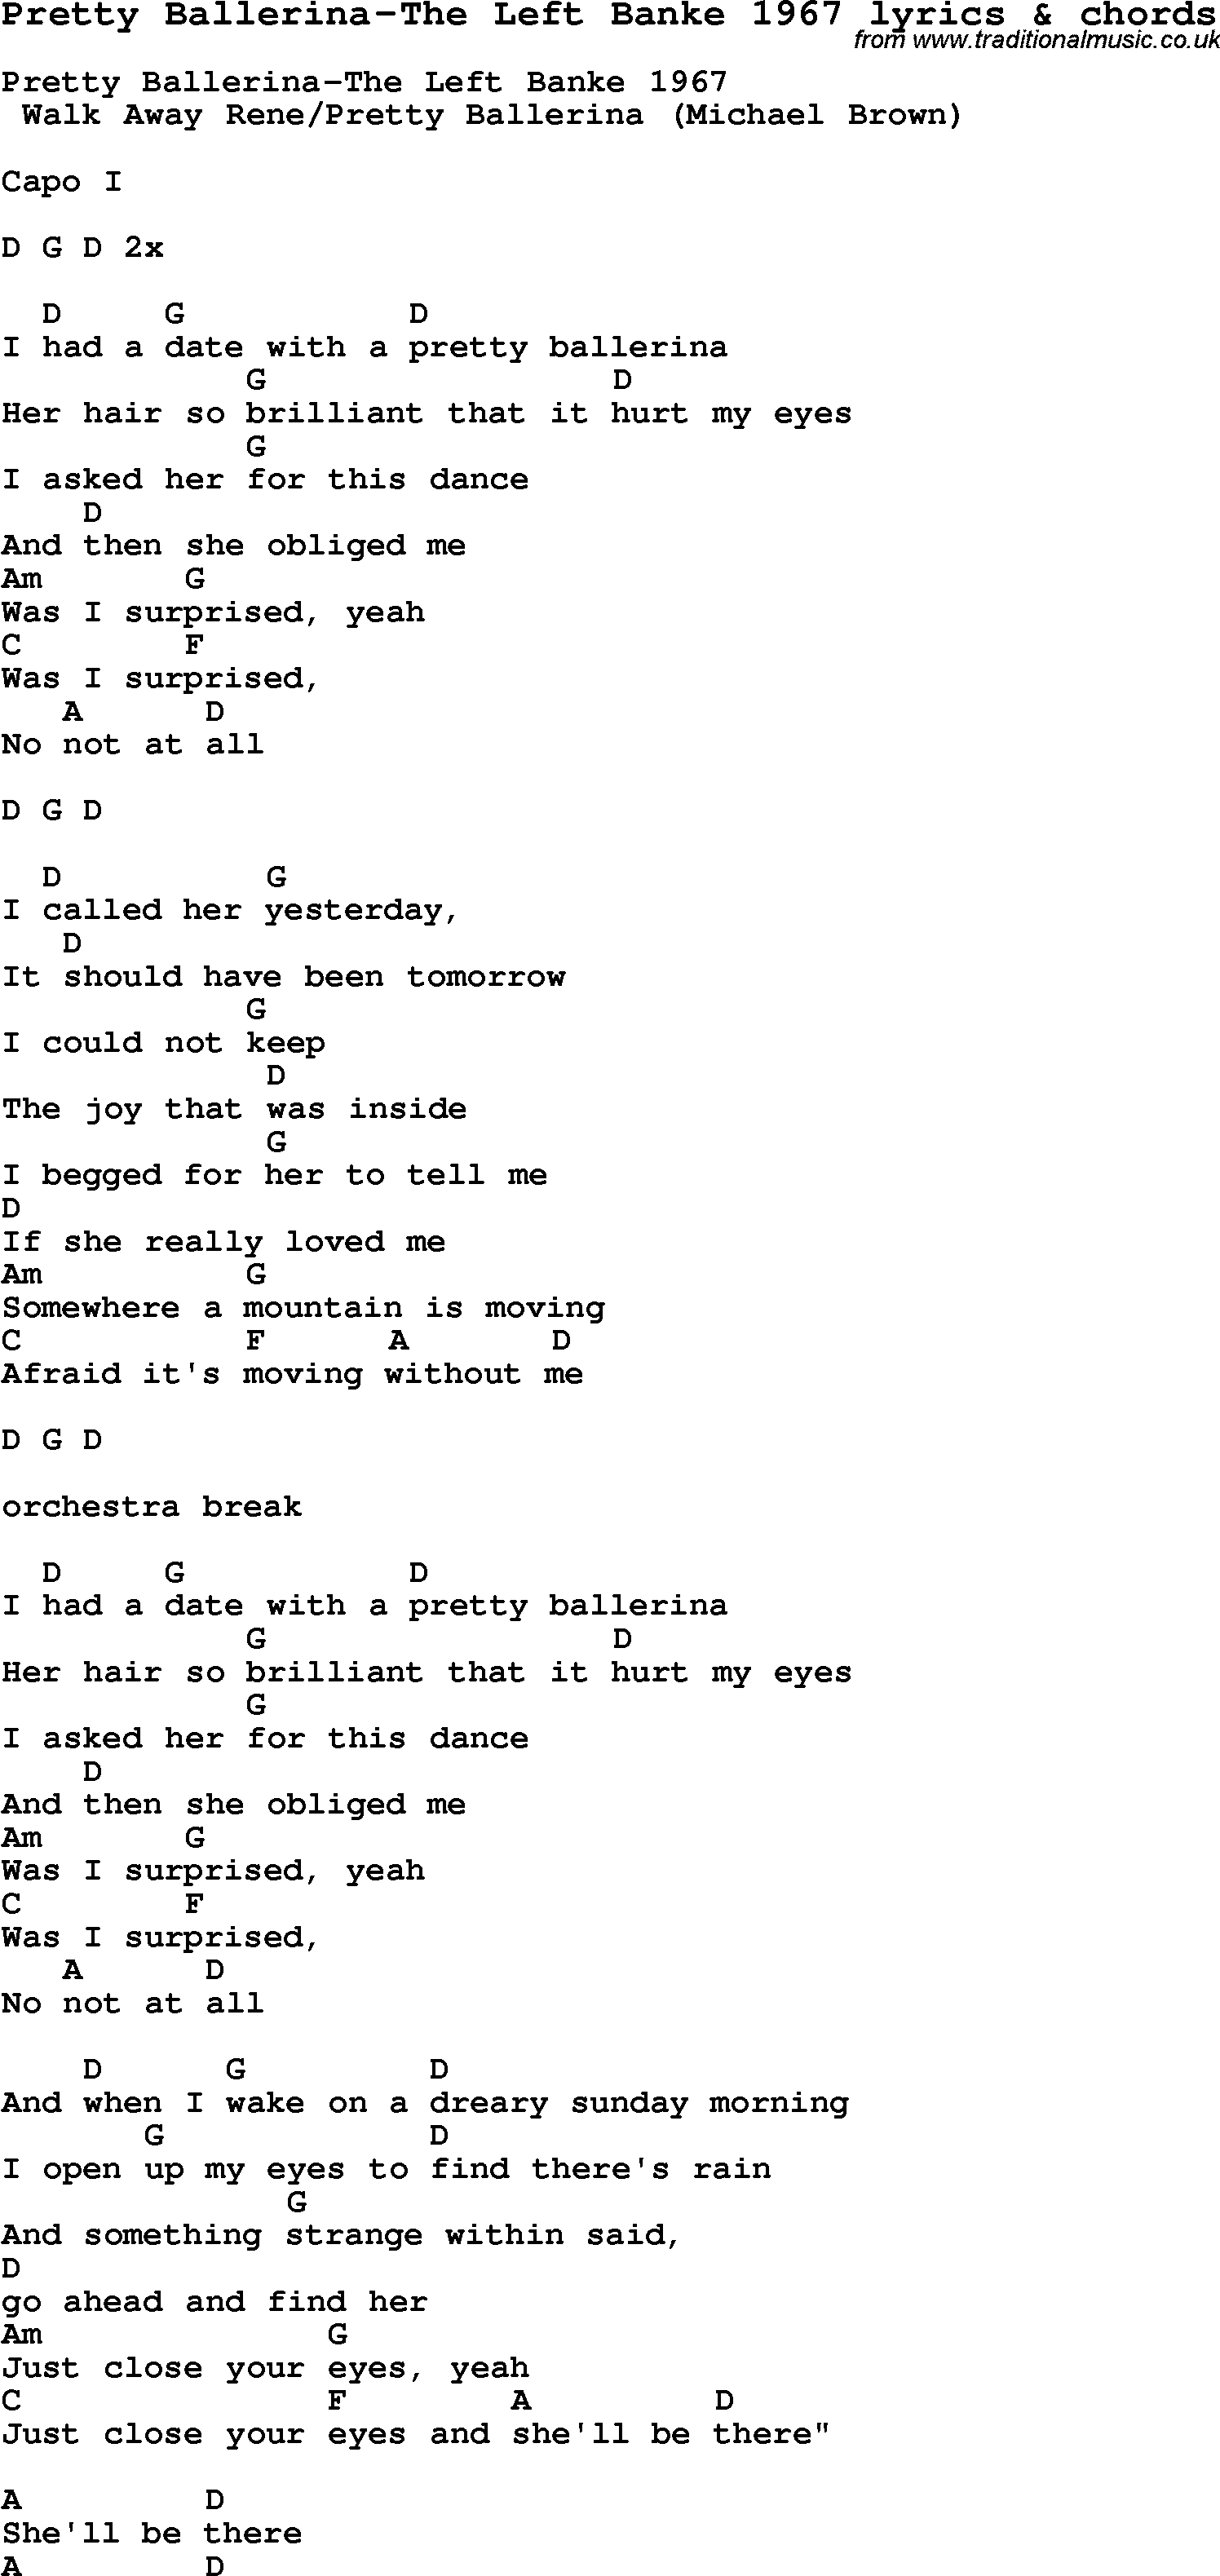 Love Song Lyrics for: Pretty Ballerina-The Left Banke 1967 with chords for Ukulele, Guitar Banjo etc.